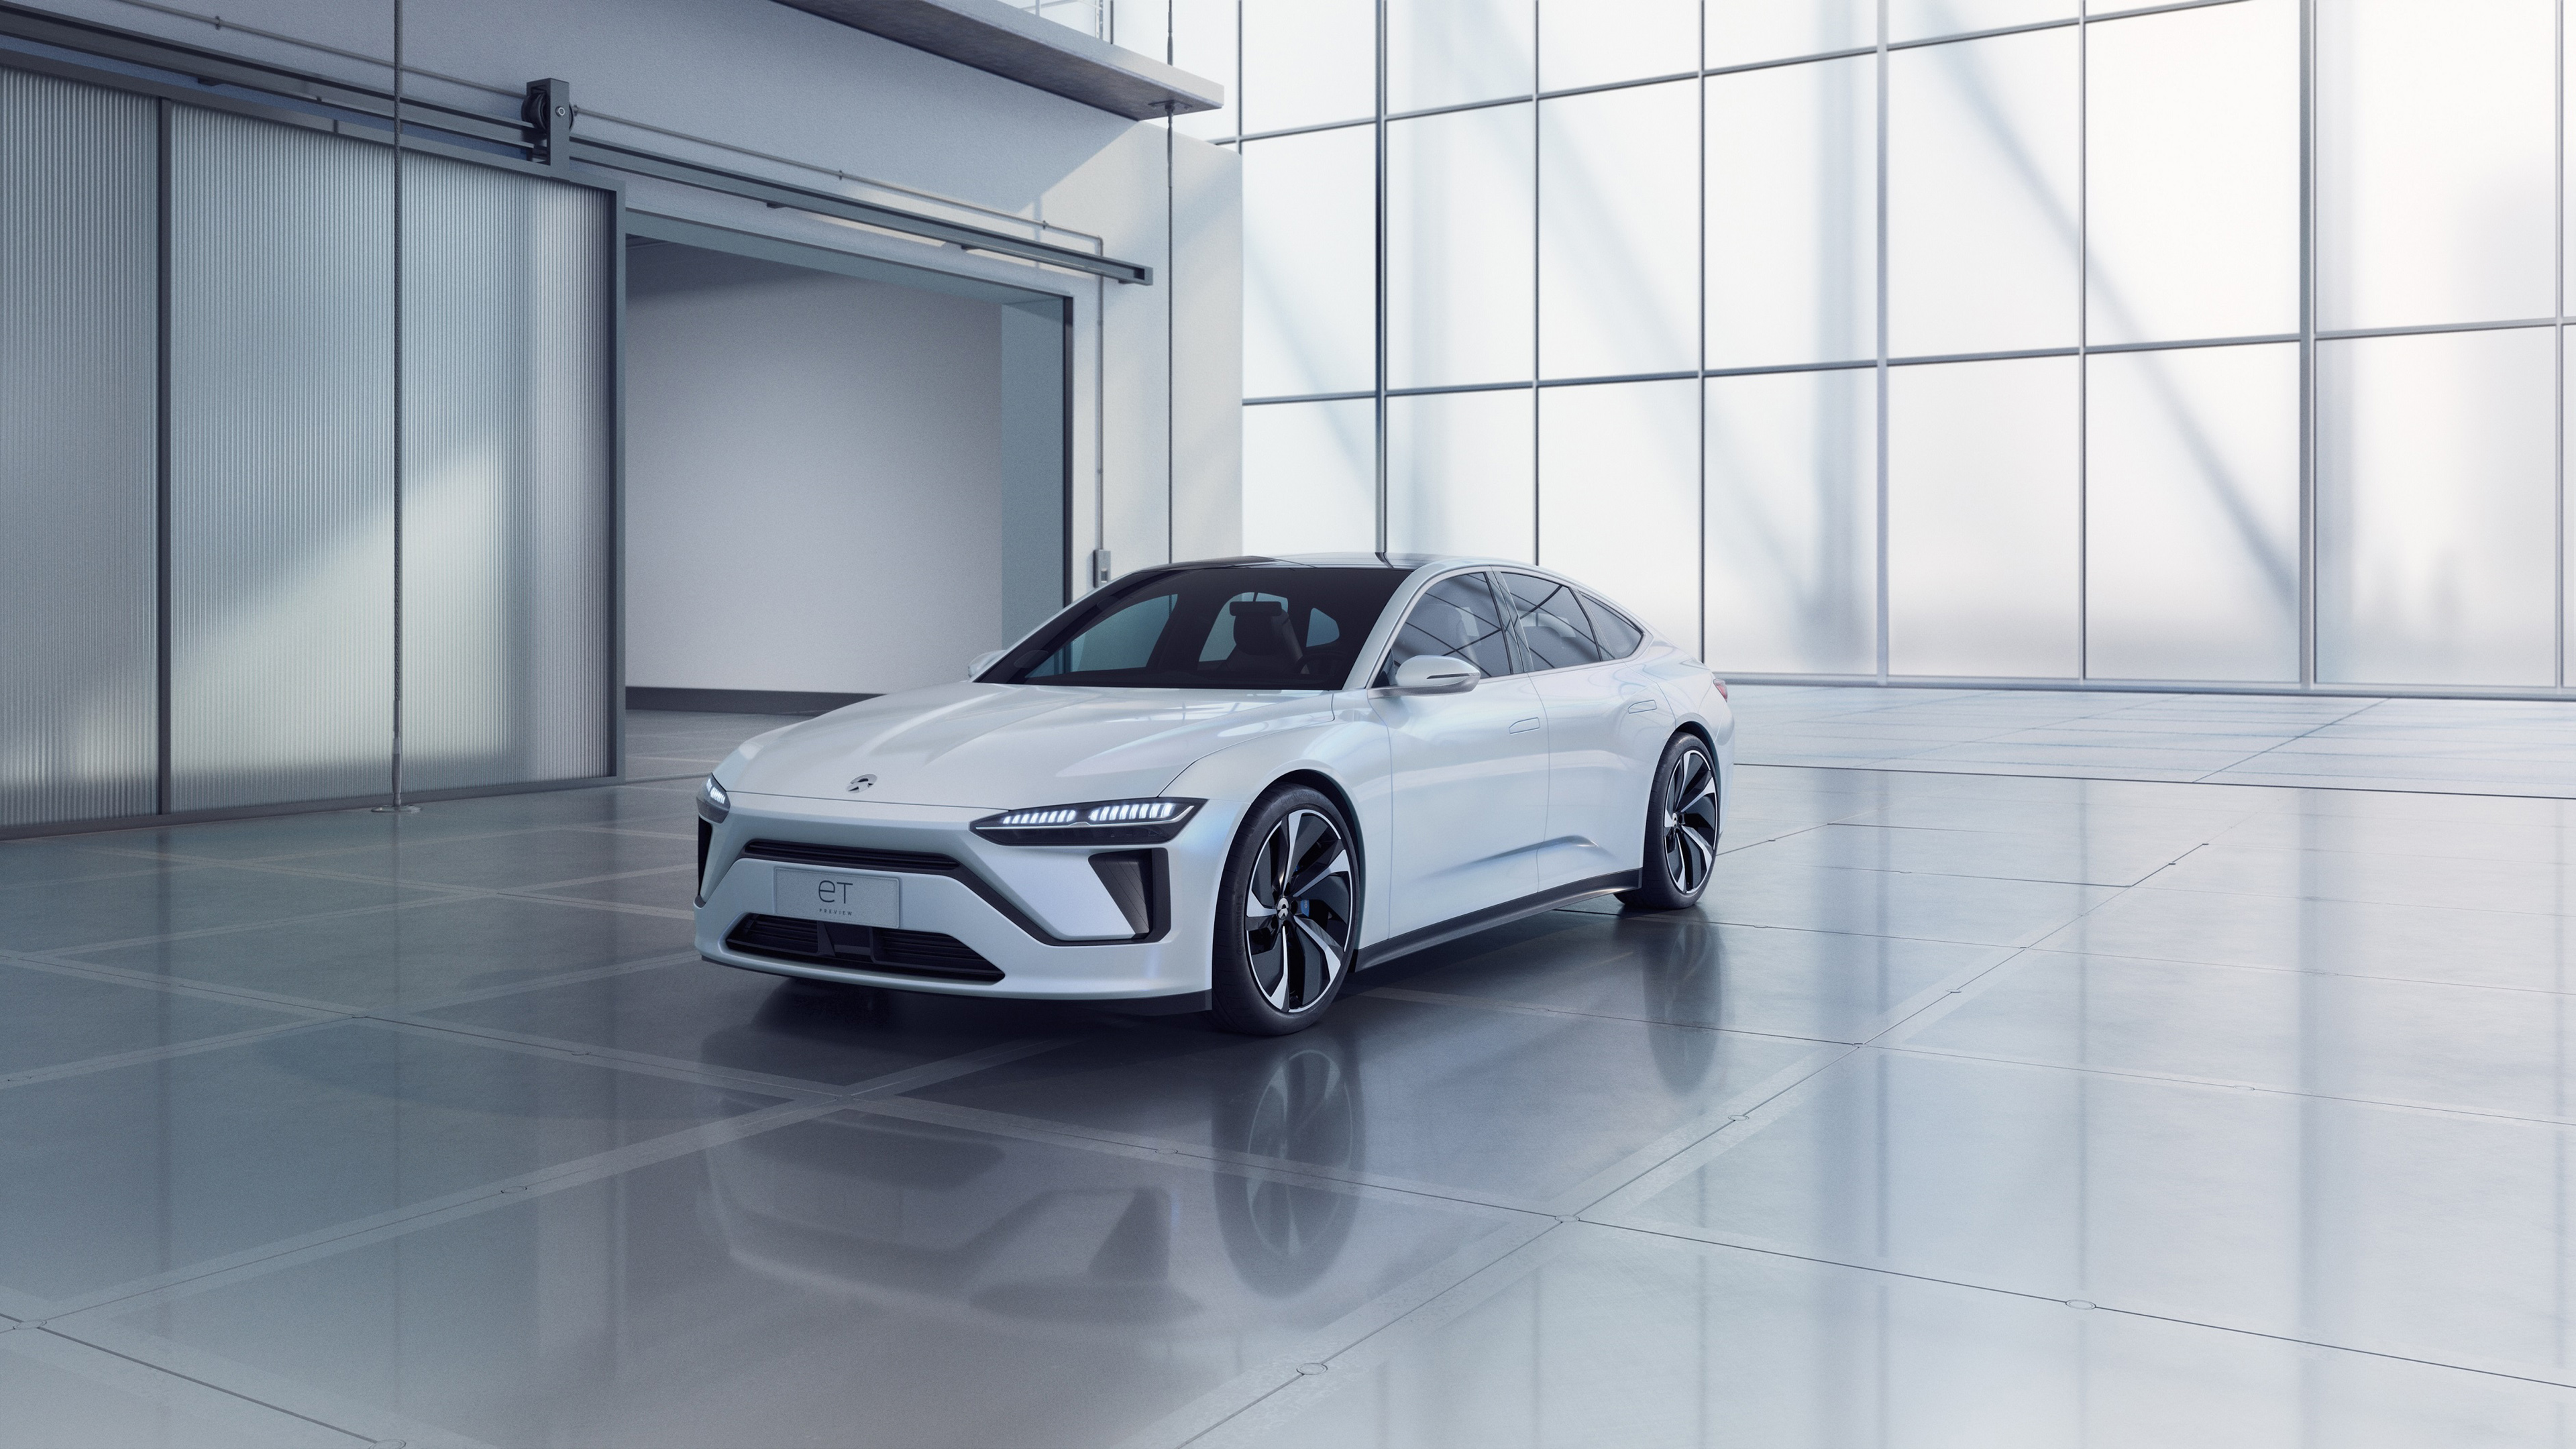 NIO ET Preview Electric Sedan 2019 4K Wallpaper | HD Car Wallpapers | ID #12478